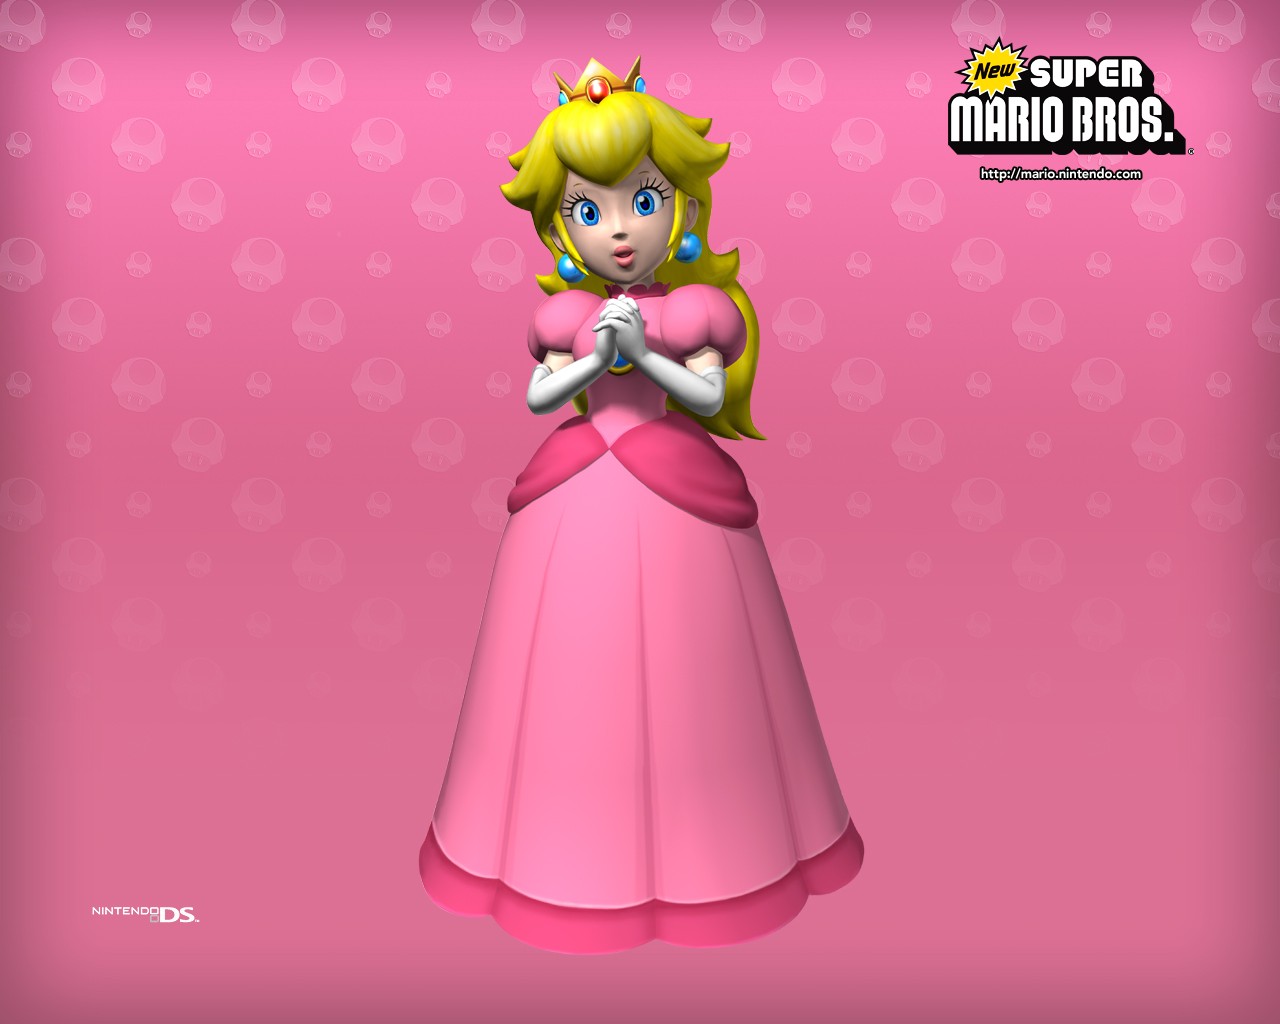 new super mario bros, video game, princess peach